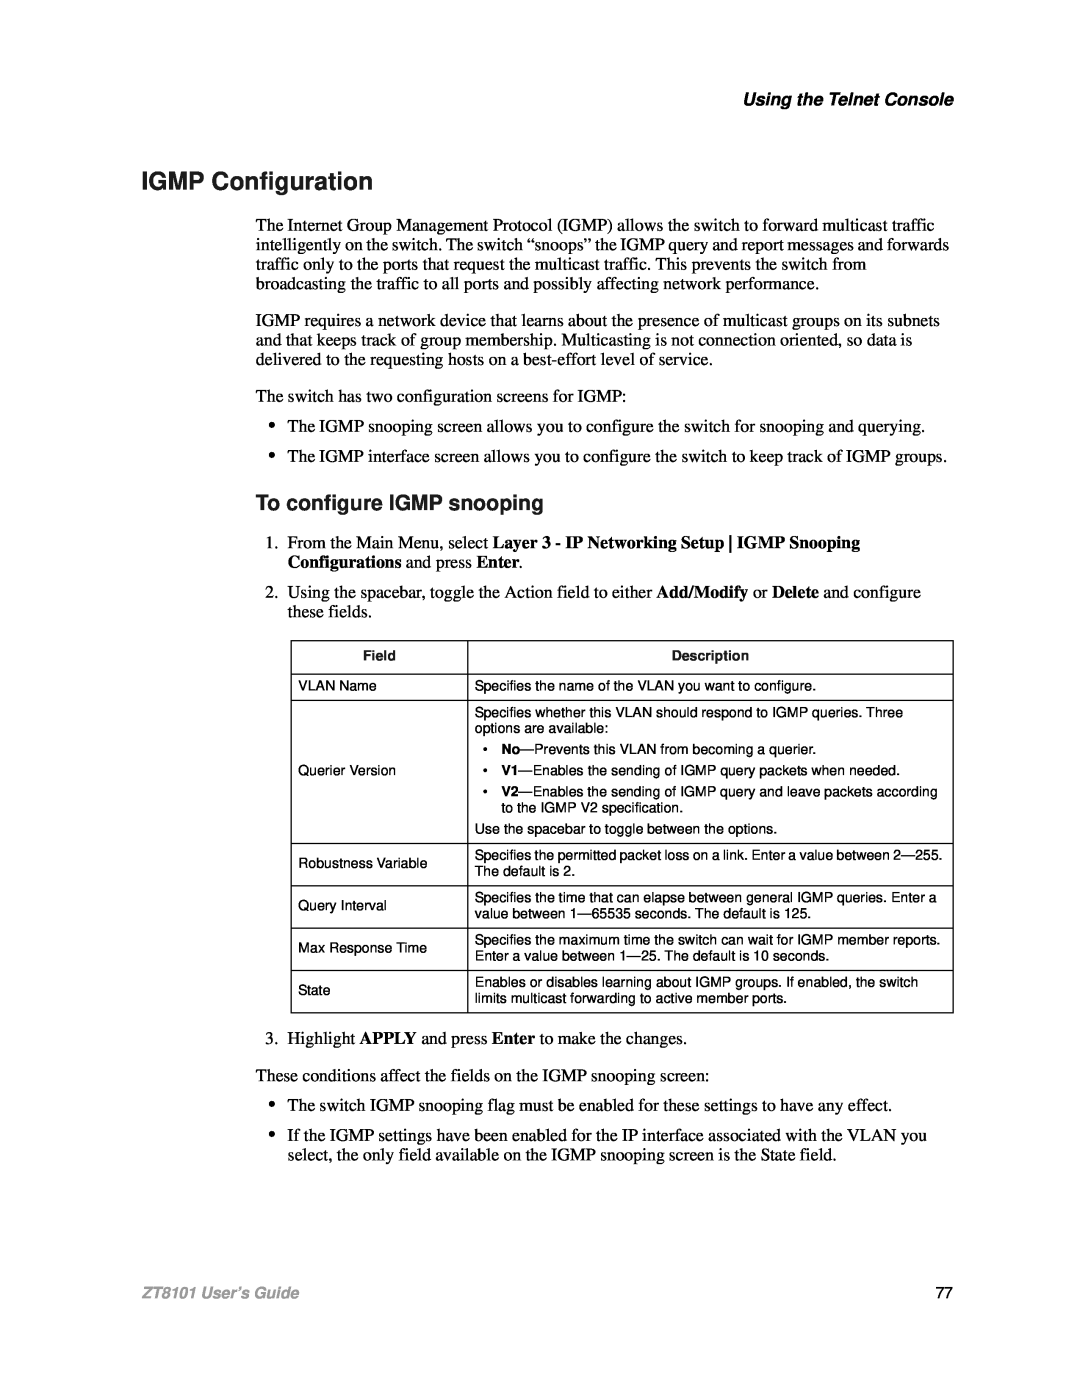 Intel ZT8101 user manual IGMP Configuration, To configure IGMP snooping, Using the Telnet Console 